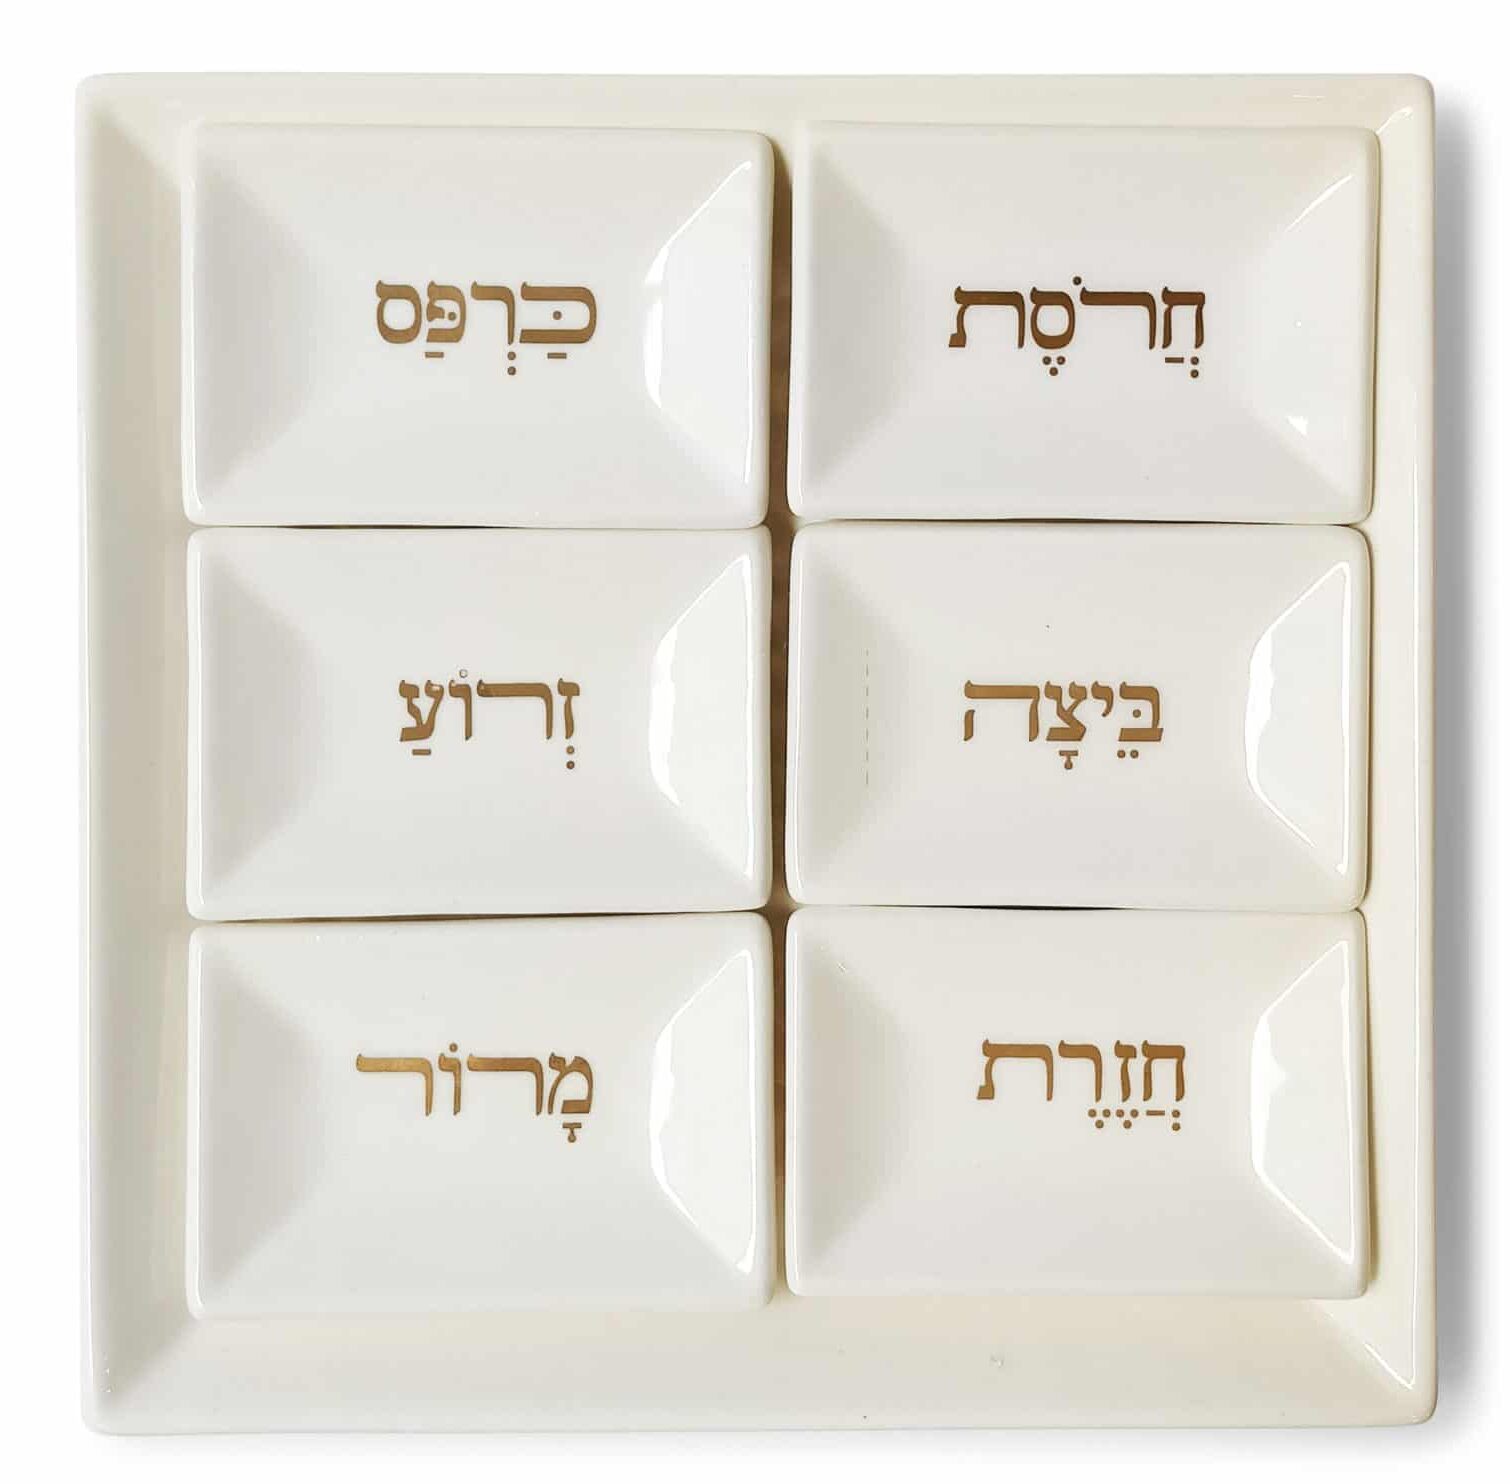 Ceramic Seder Plate